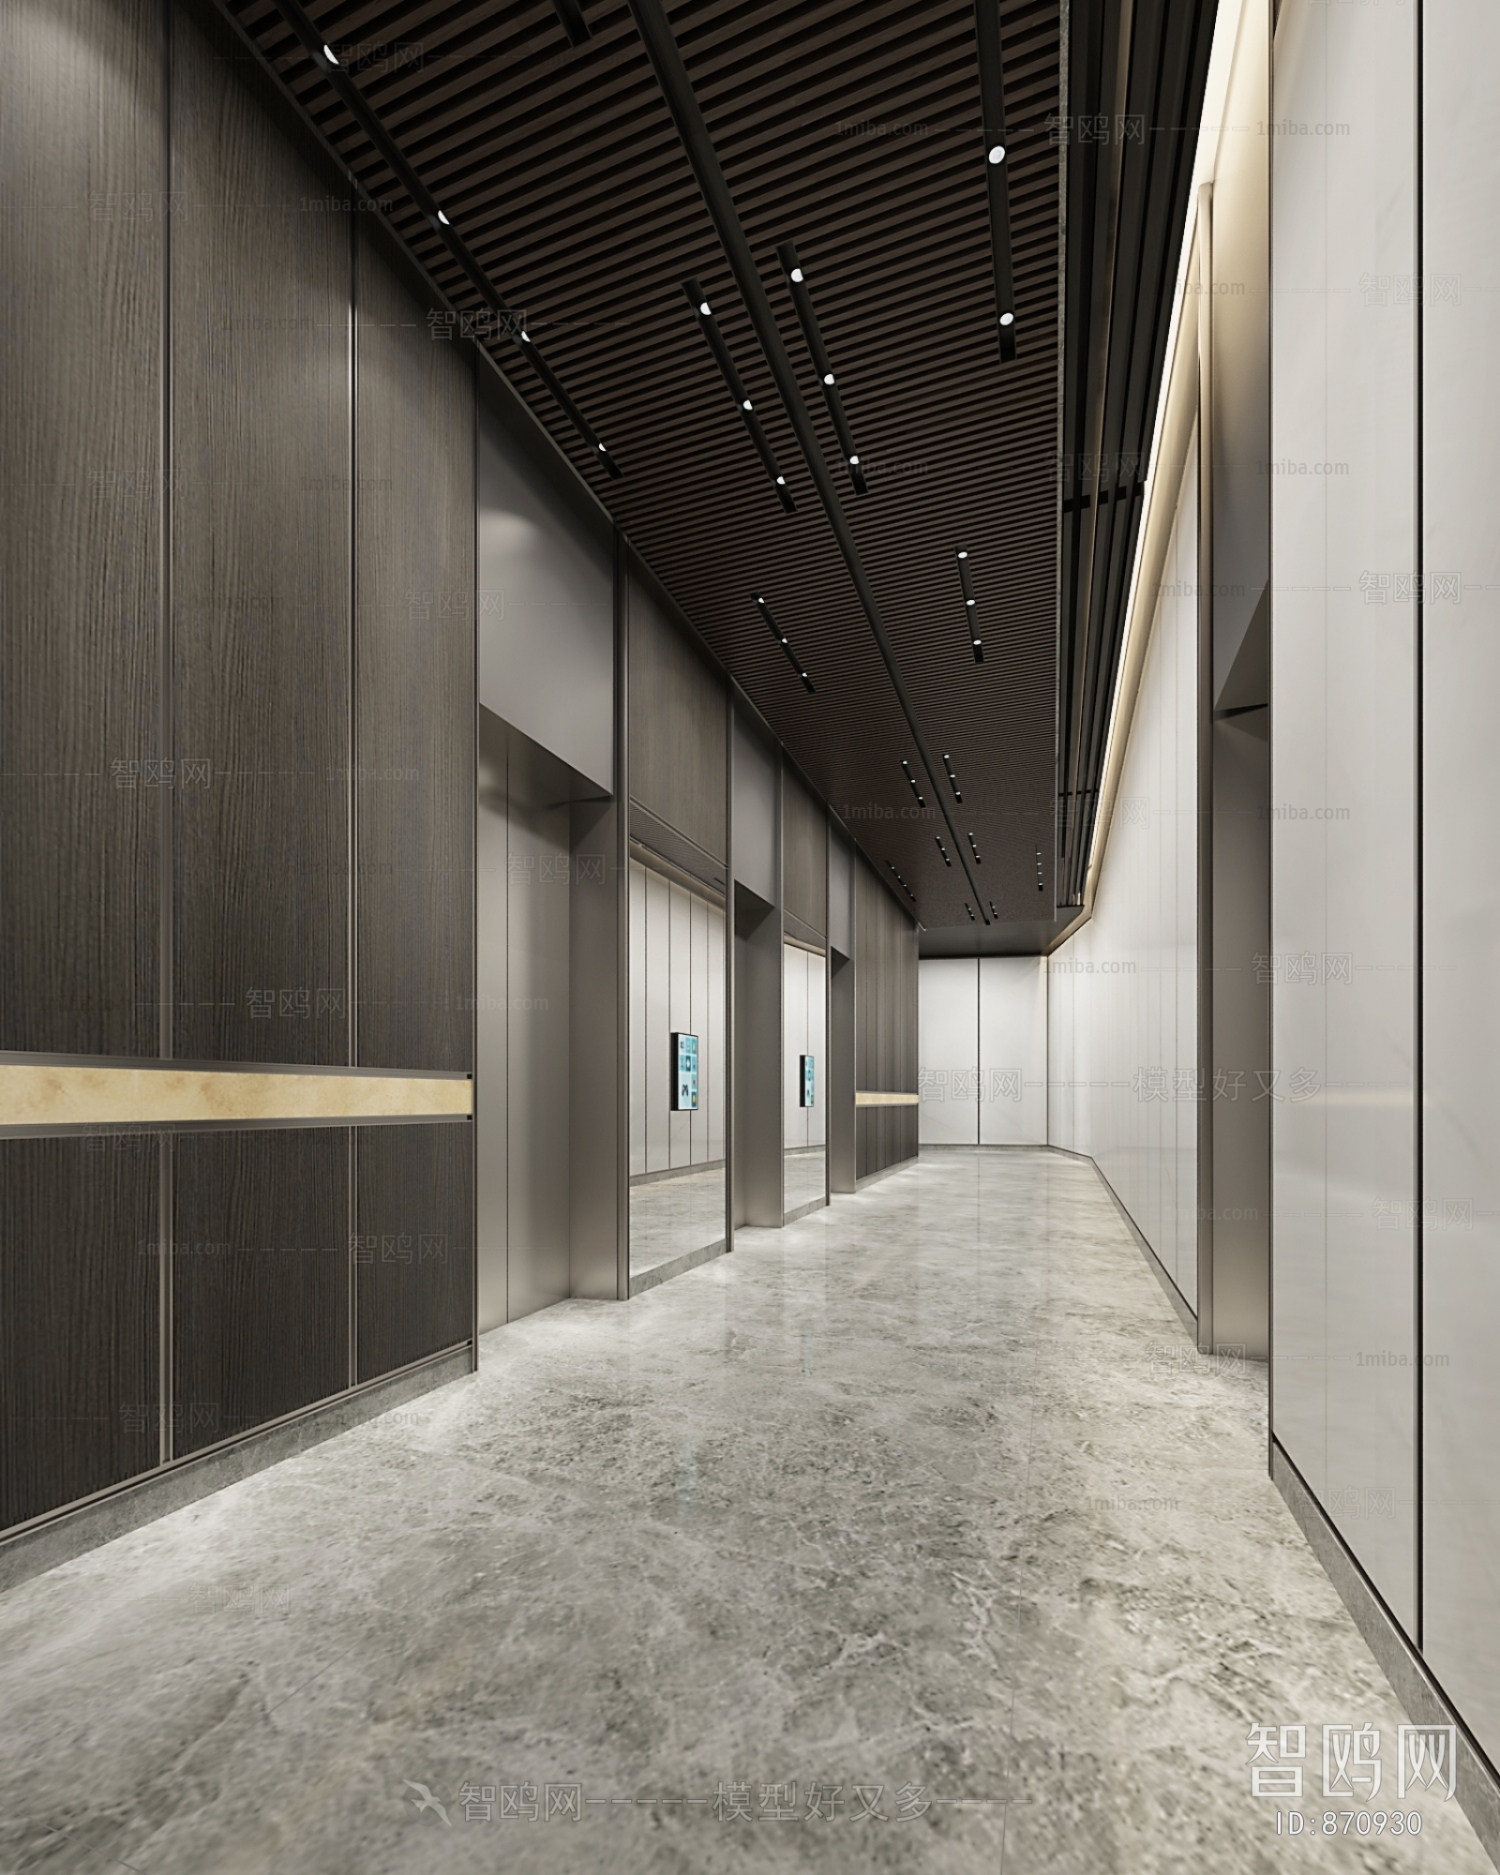 Industrial Style Corridor/elevator Hall